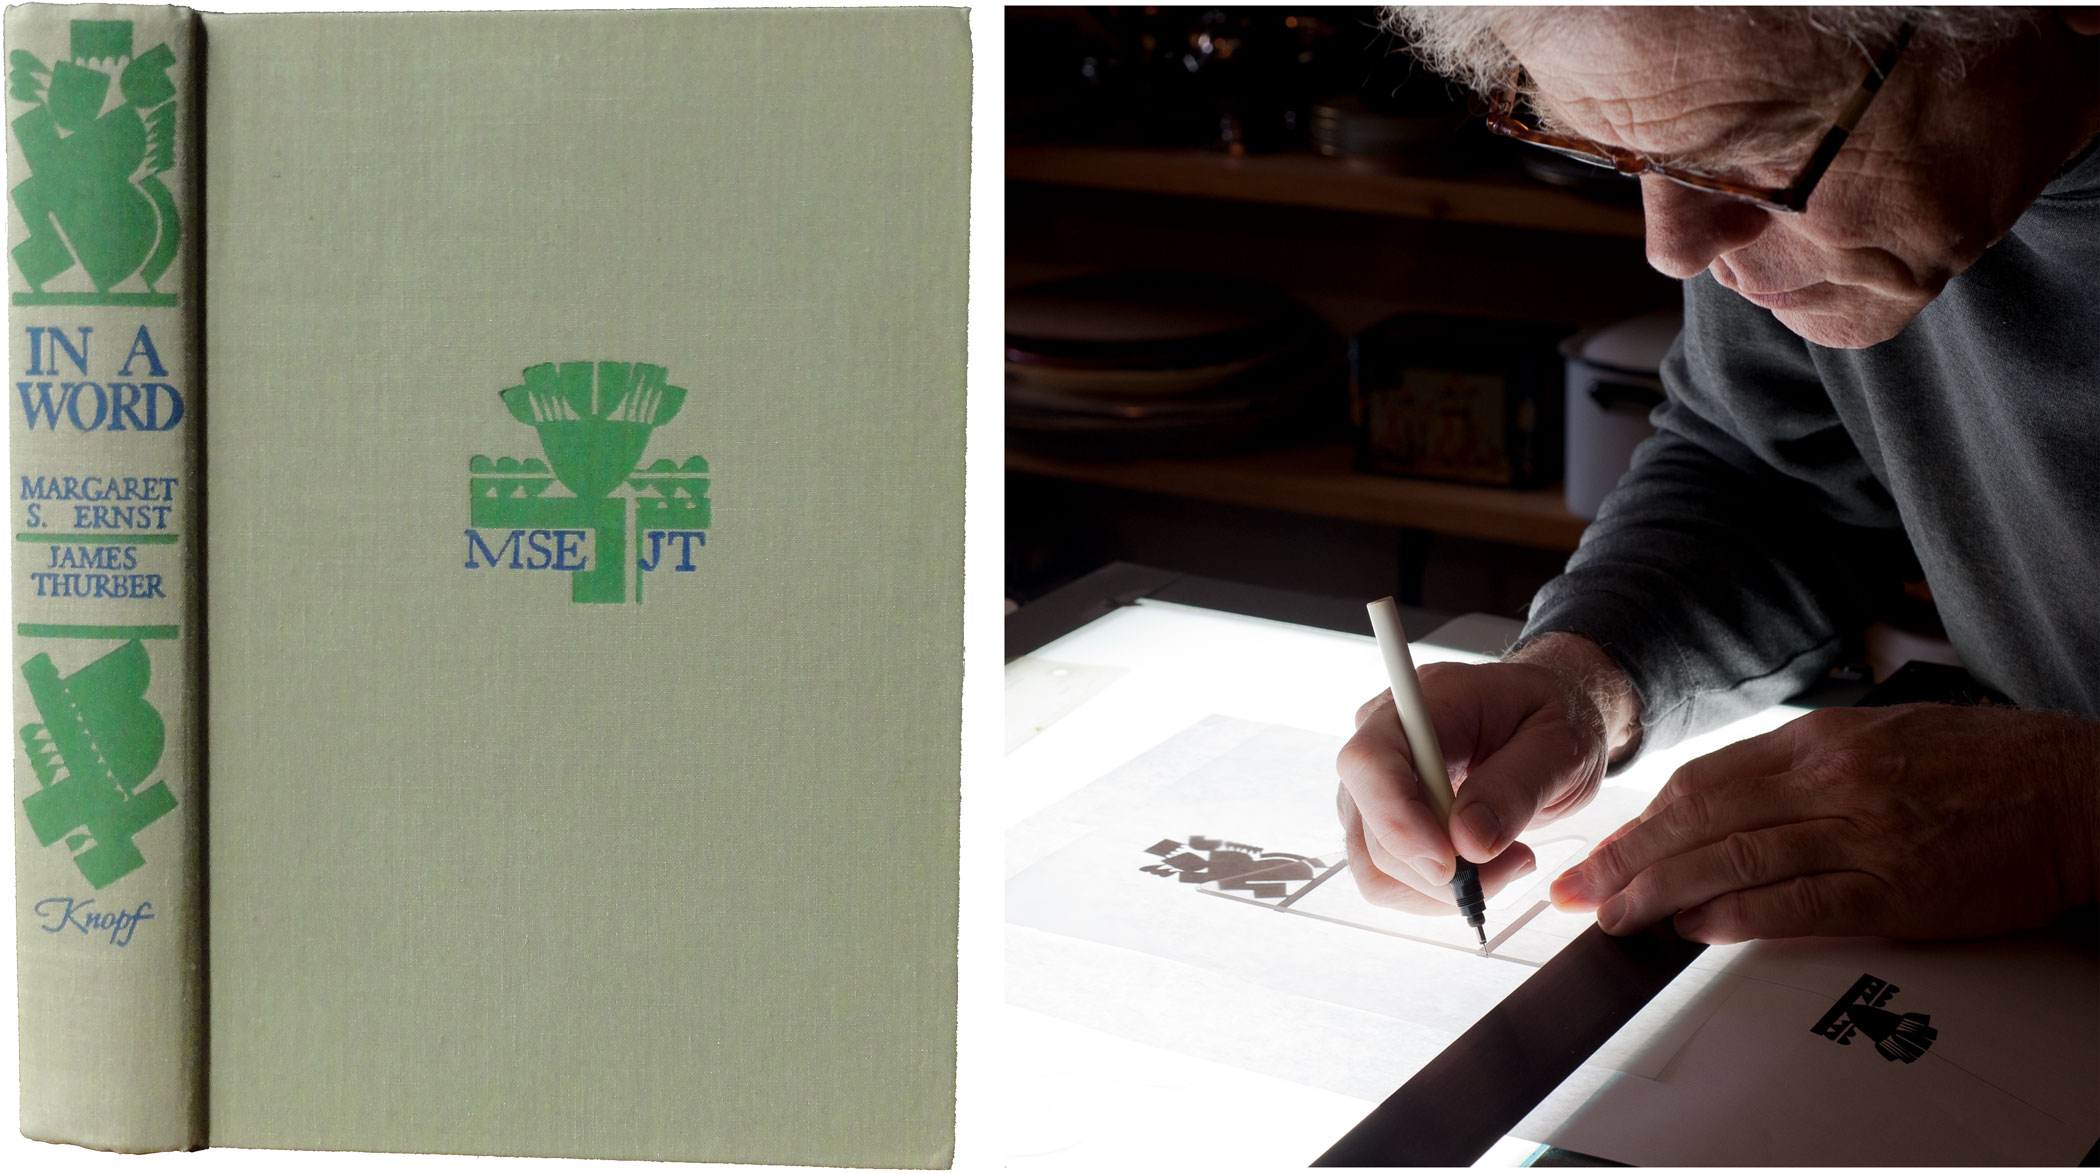 Dwiggins binding design for Margaret S. Ernst, “In A Word” (Knopf, 1939).